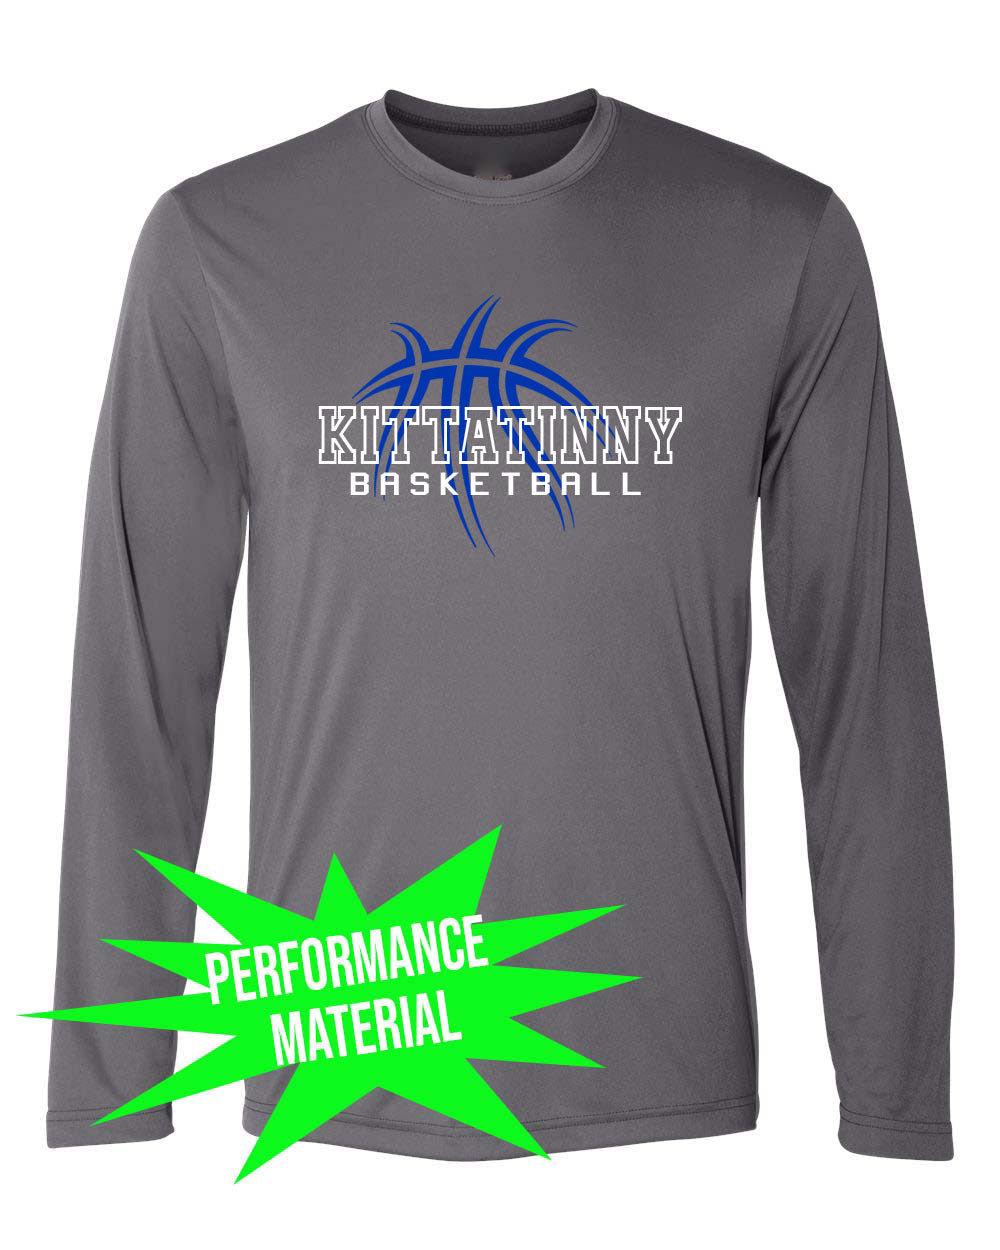 Kittatinny Basketball Performance Material Design 4 Long Sleeve Shirt